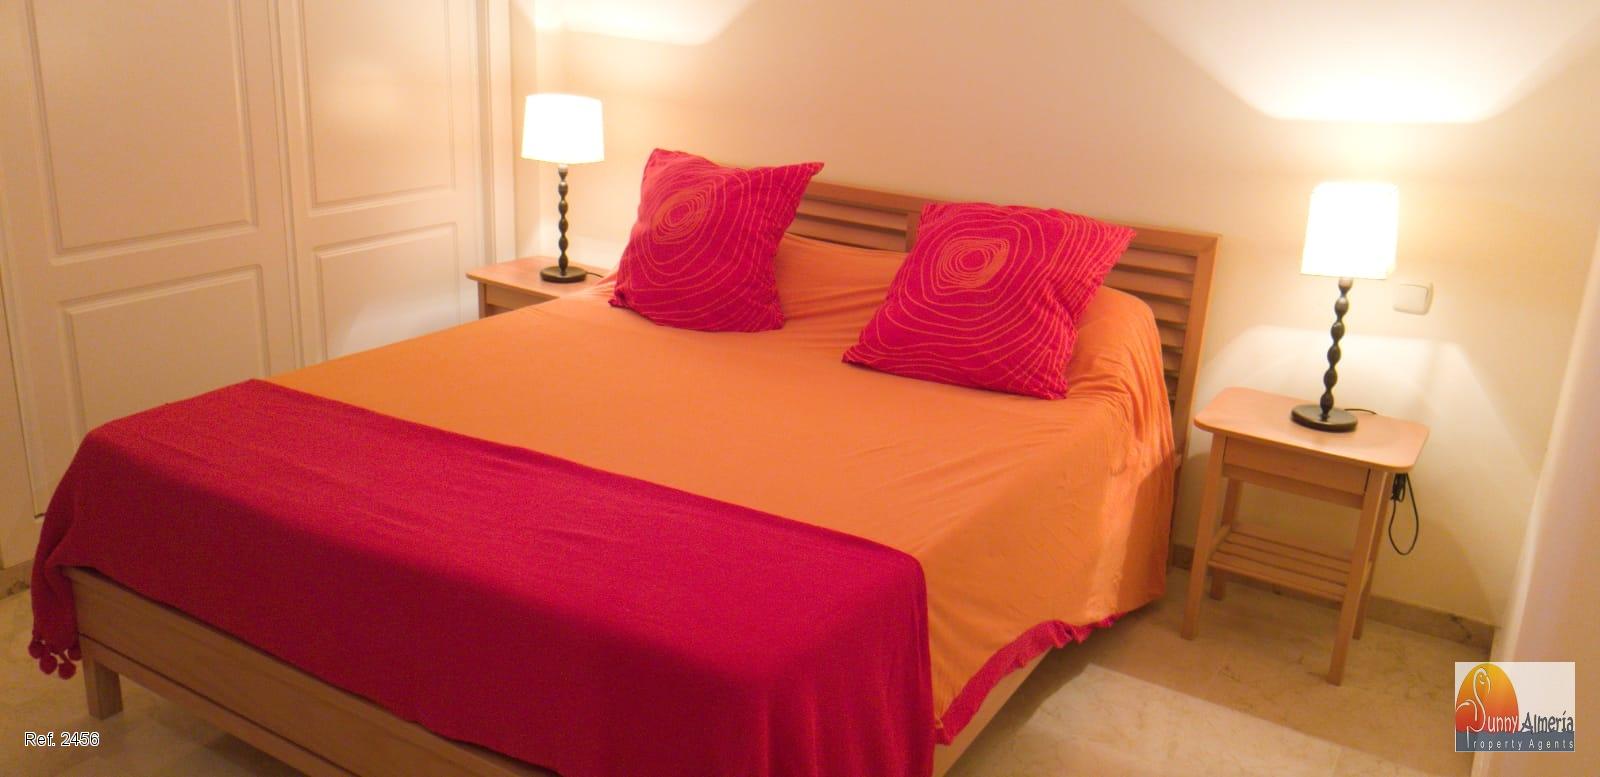 Luxury Apartment for rent in Playa Serena Sur (Roquetas de Mar), 950 €/month